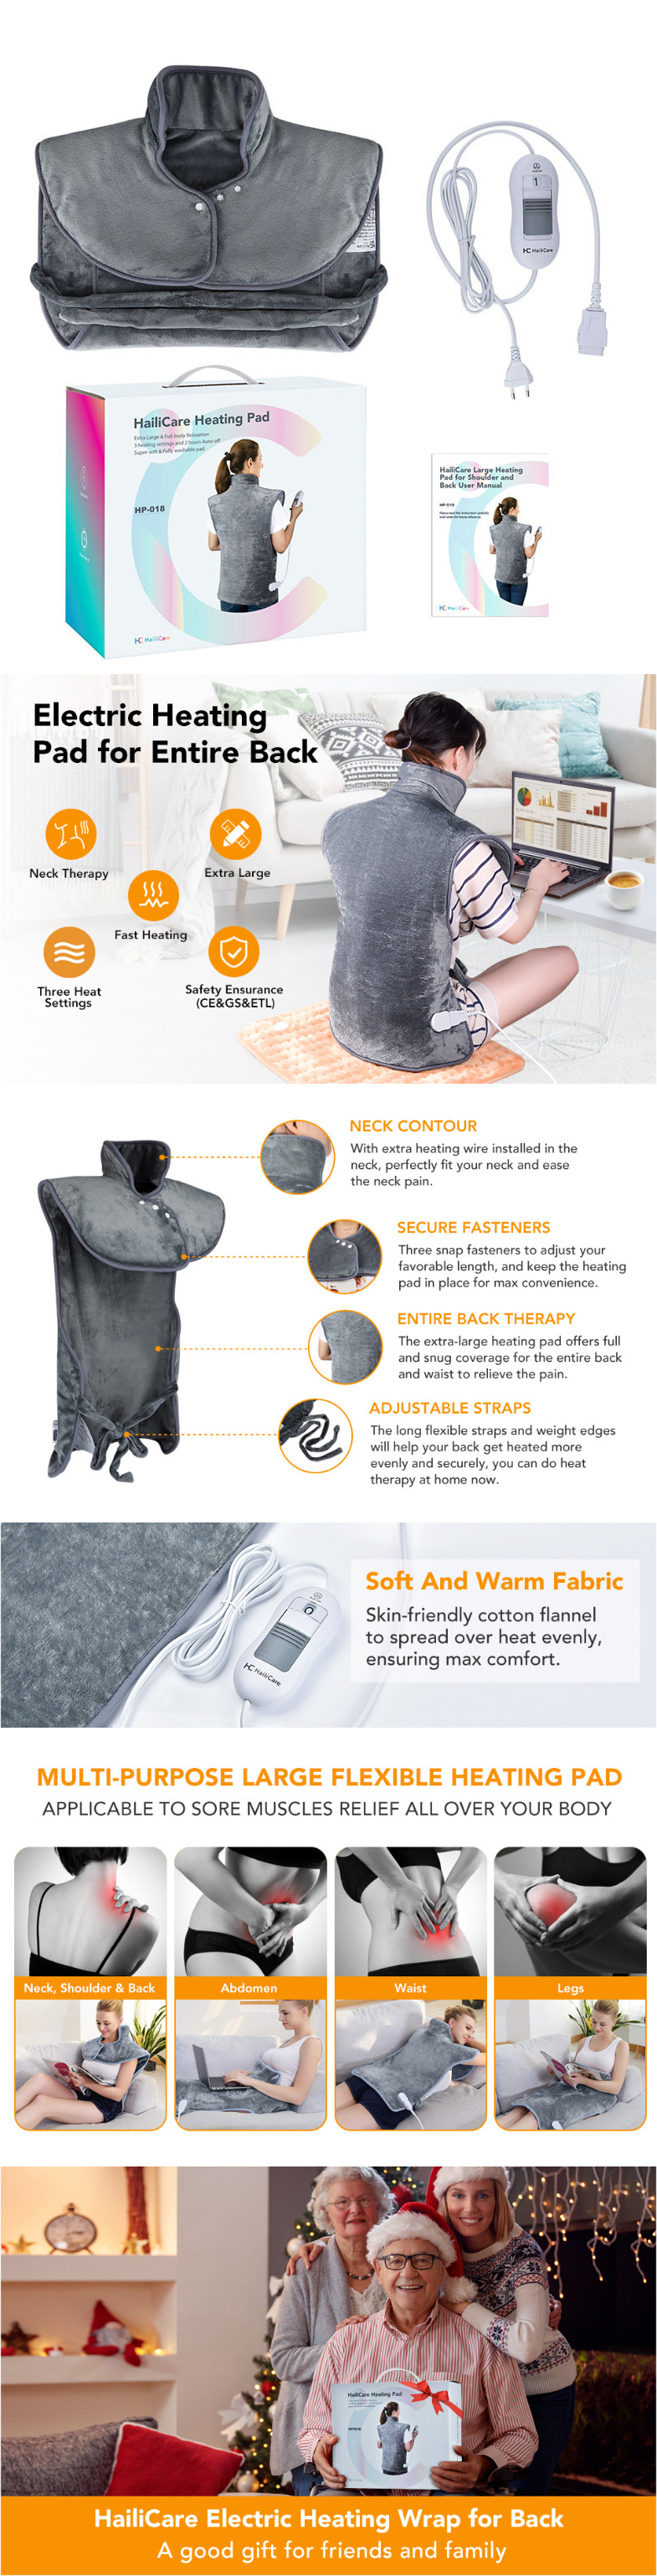 Electric-Heating-Shawl-Blanket-3-Speed-Temperature-Control-Winter-Shoulder-Neck-Back-Warming-for-Men-1905452-1